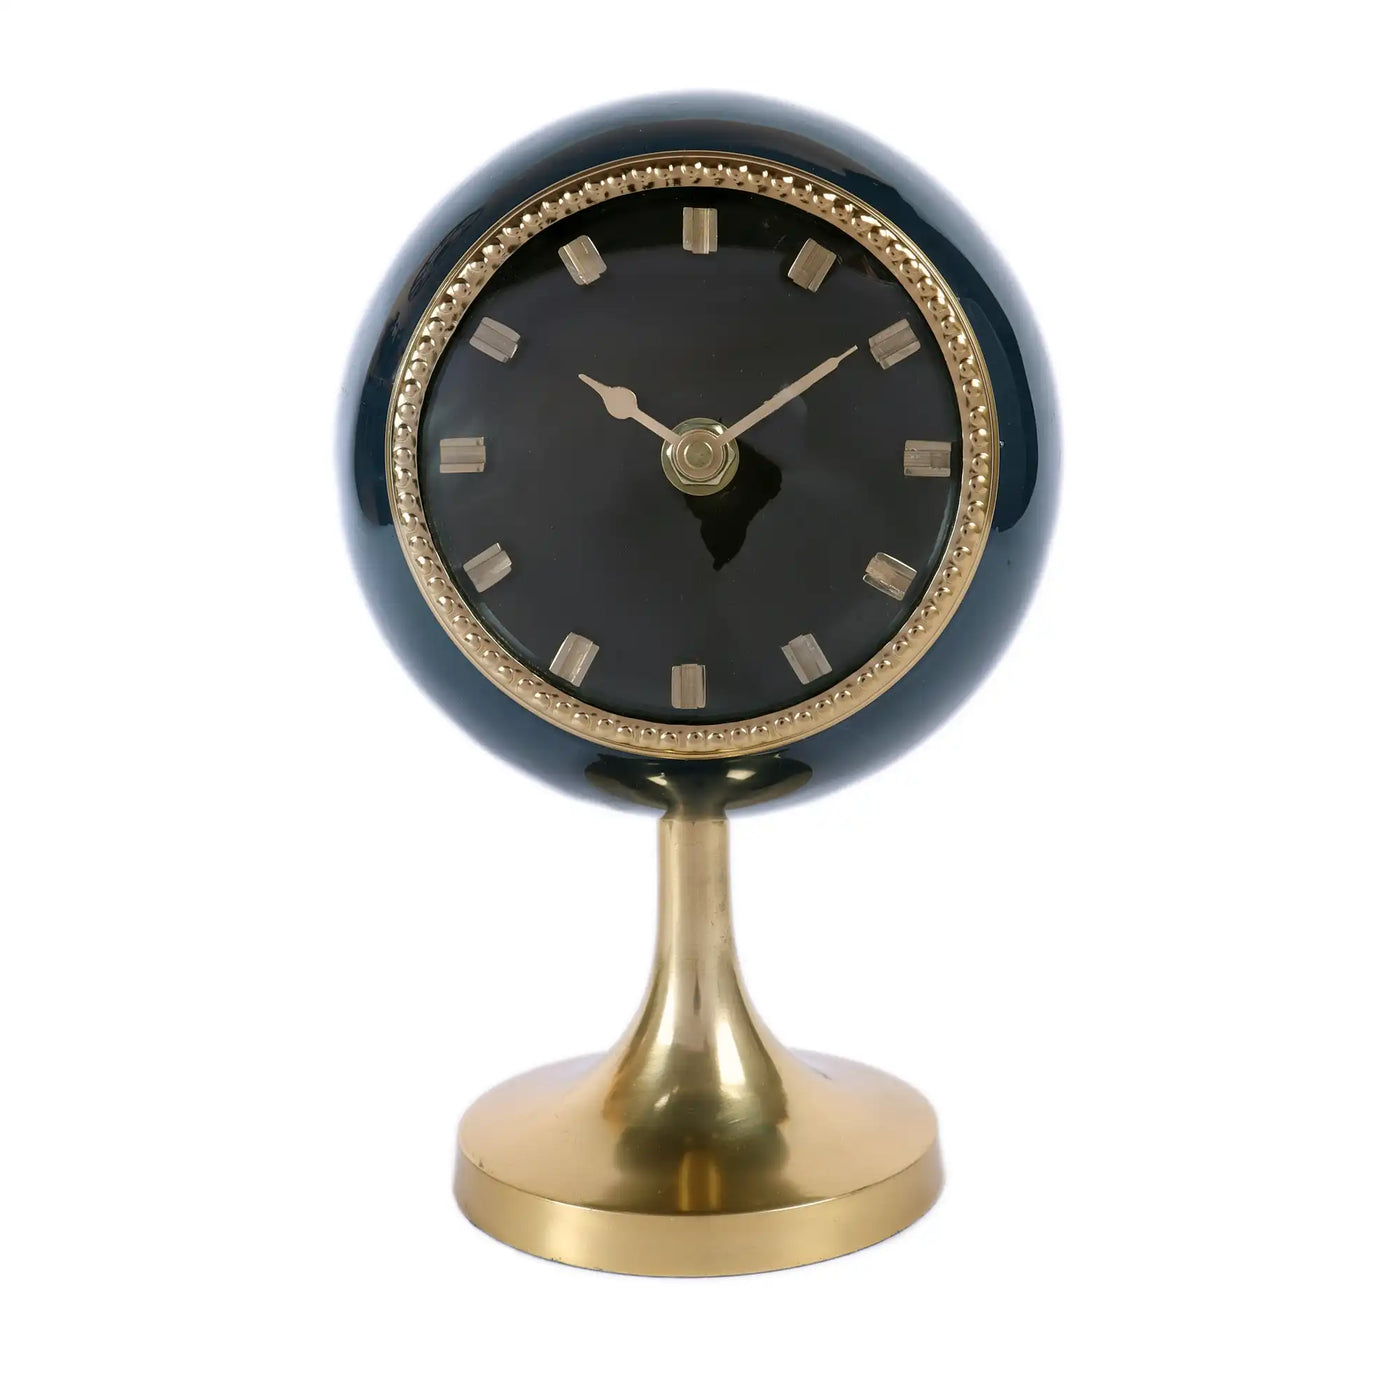 Circular Globe Clock with Teal Blue & Gold Finish 61-115-28-5-2